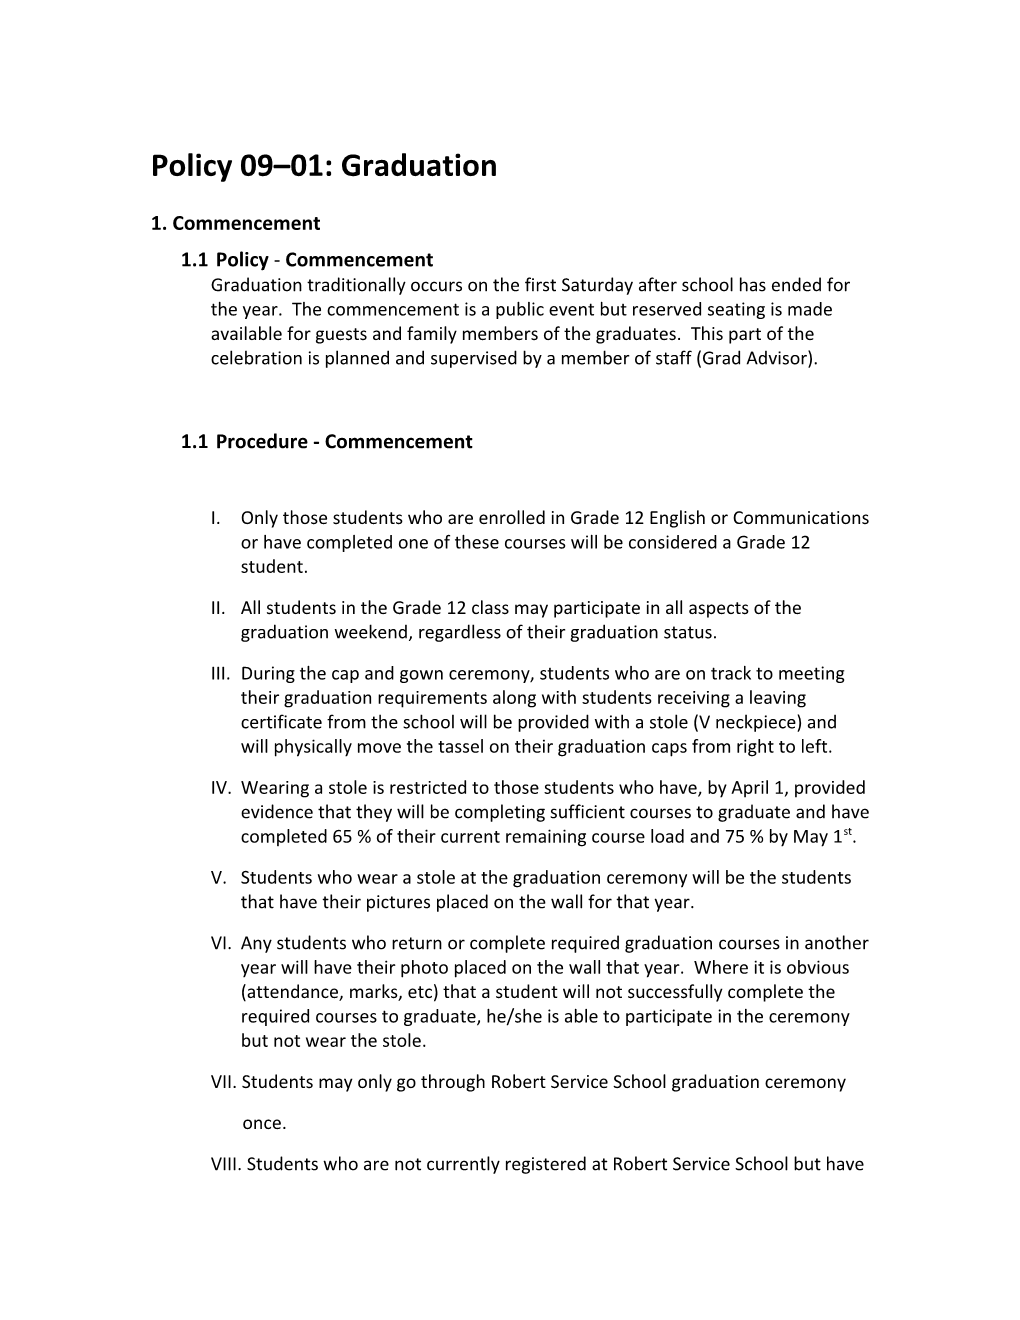 Policy 09 01: Graduation